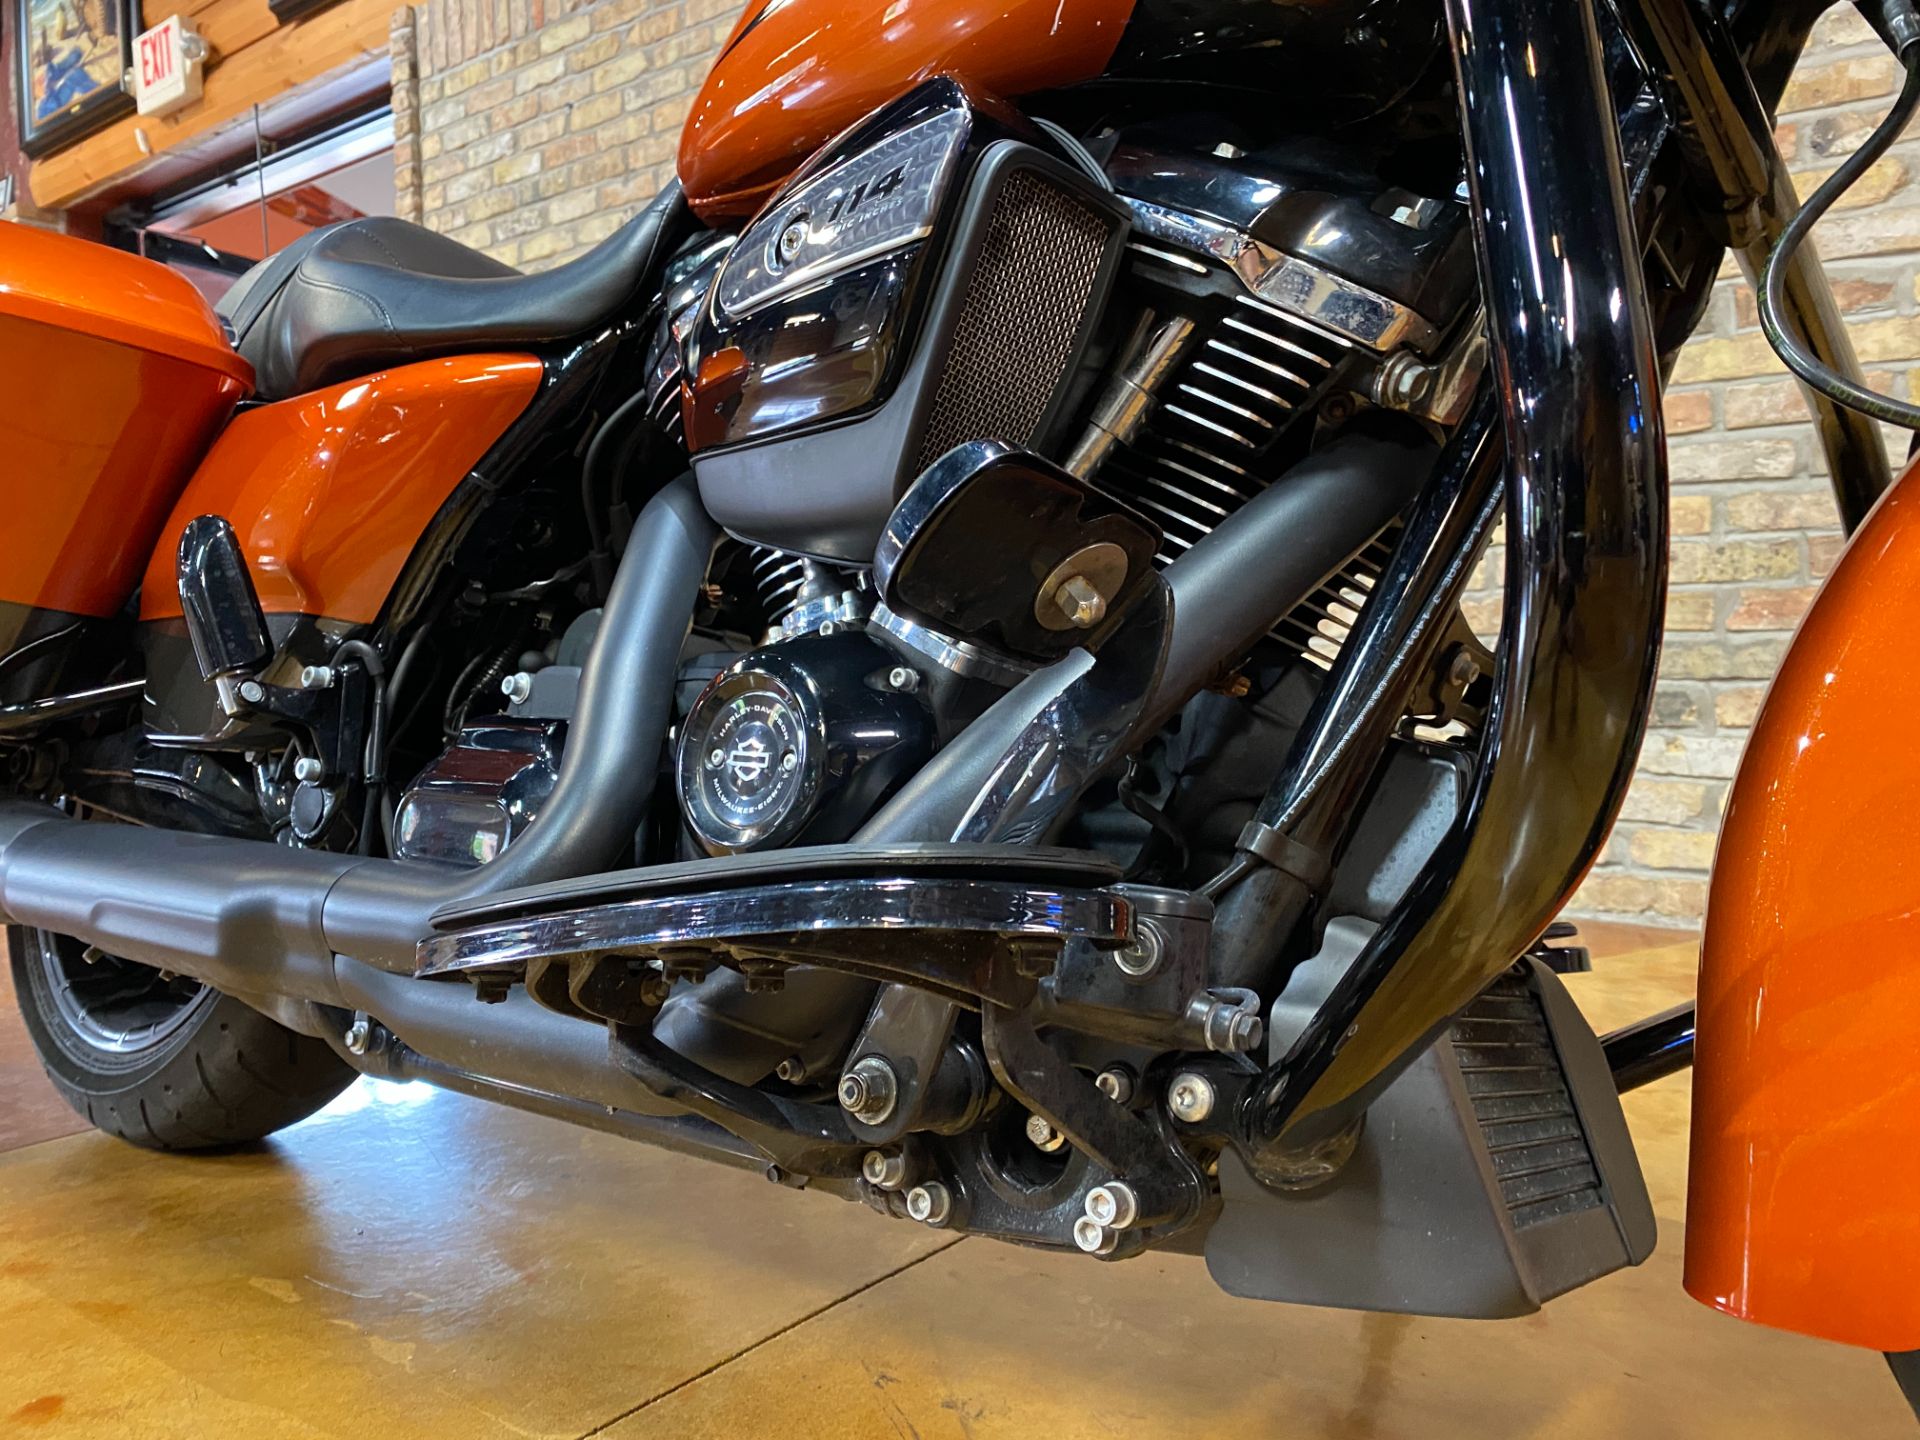 2020 Harley-Davidson Street Glide® Special in Big Bend, Wisconsin - Photo 13